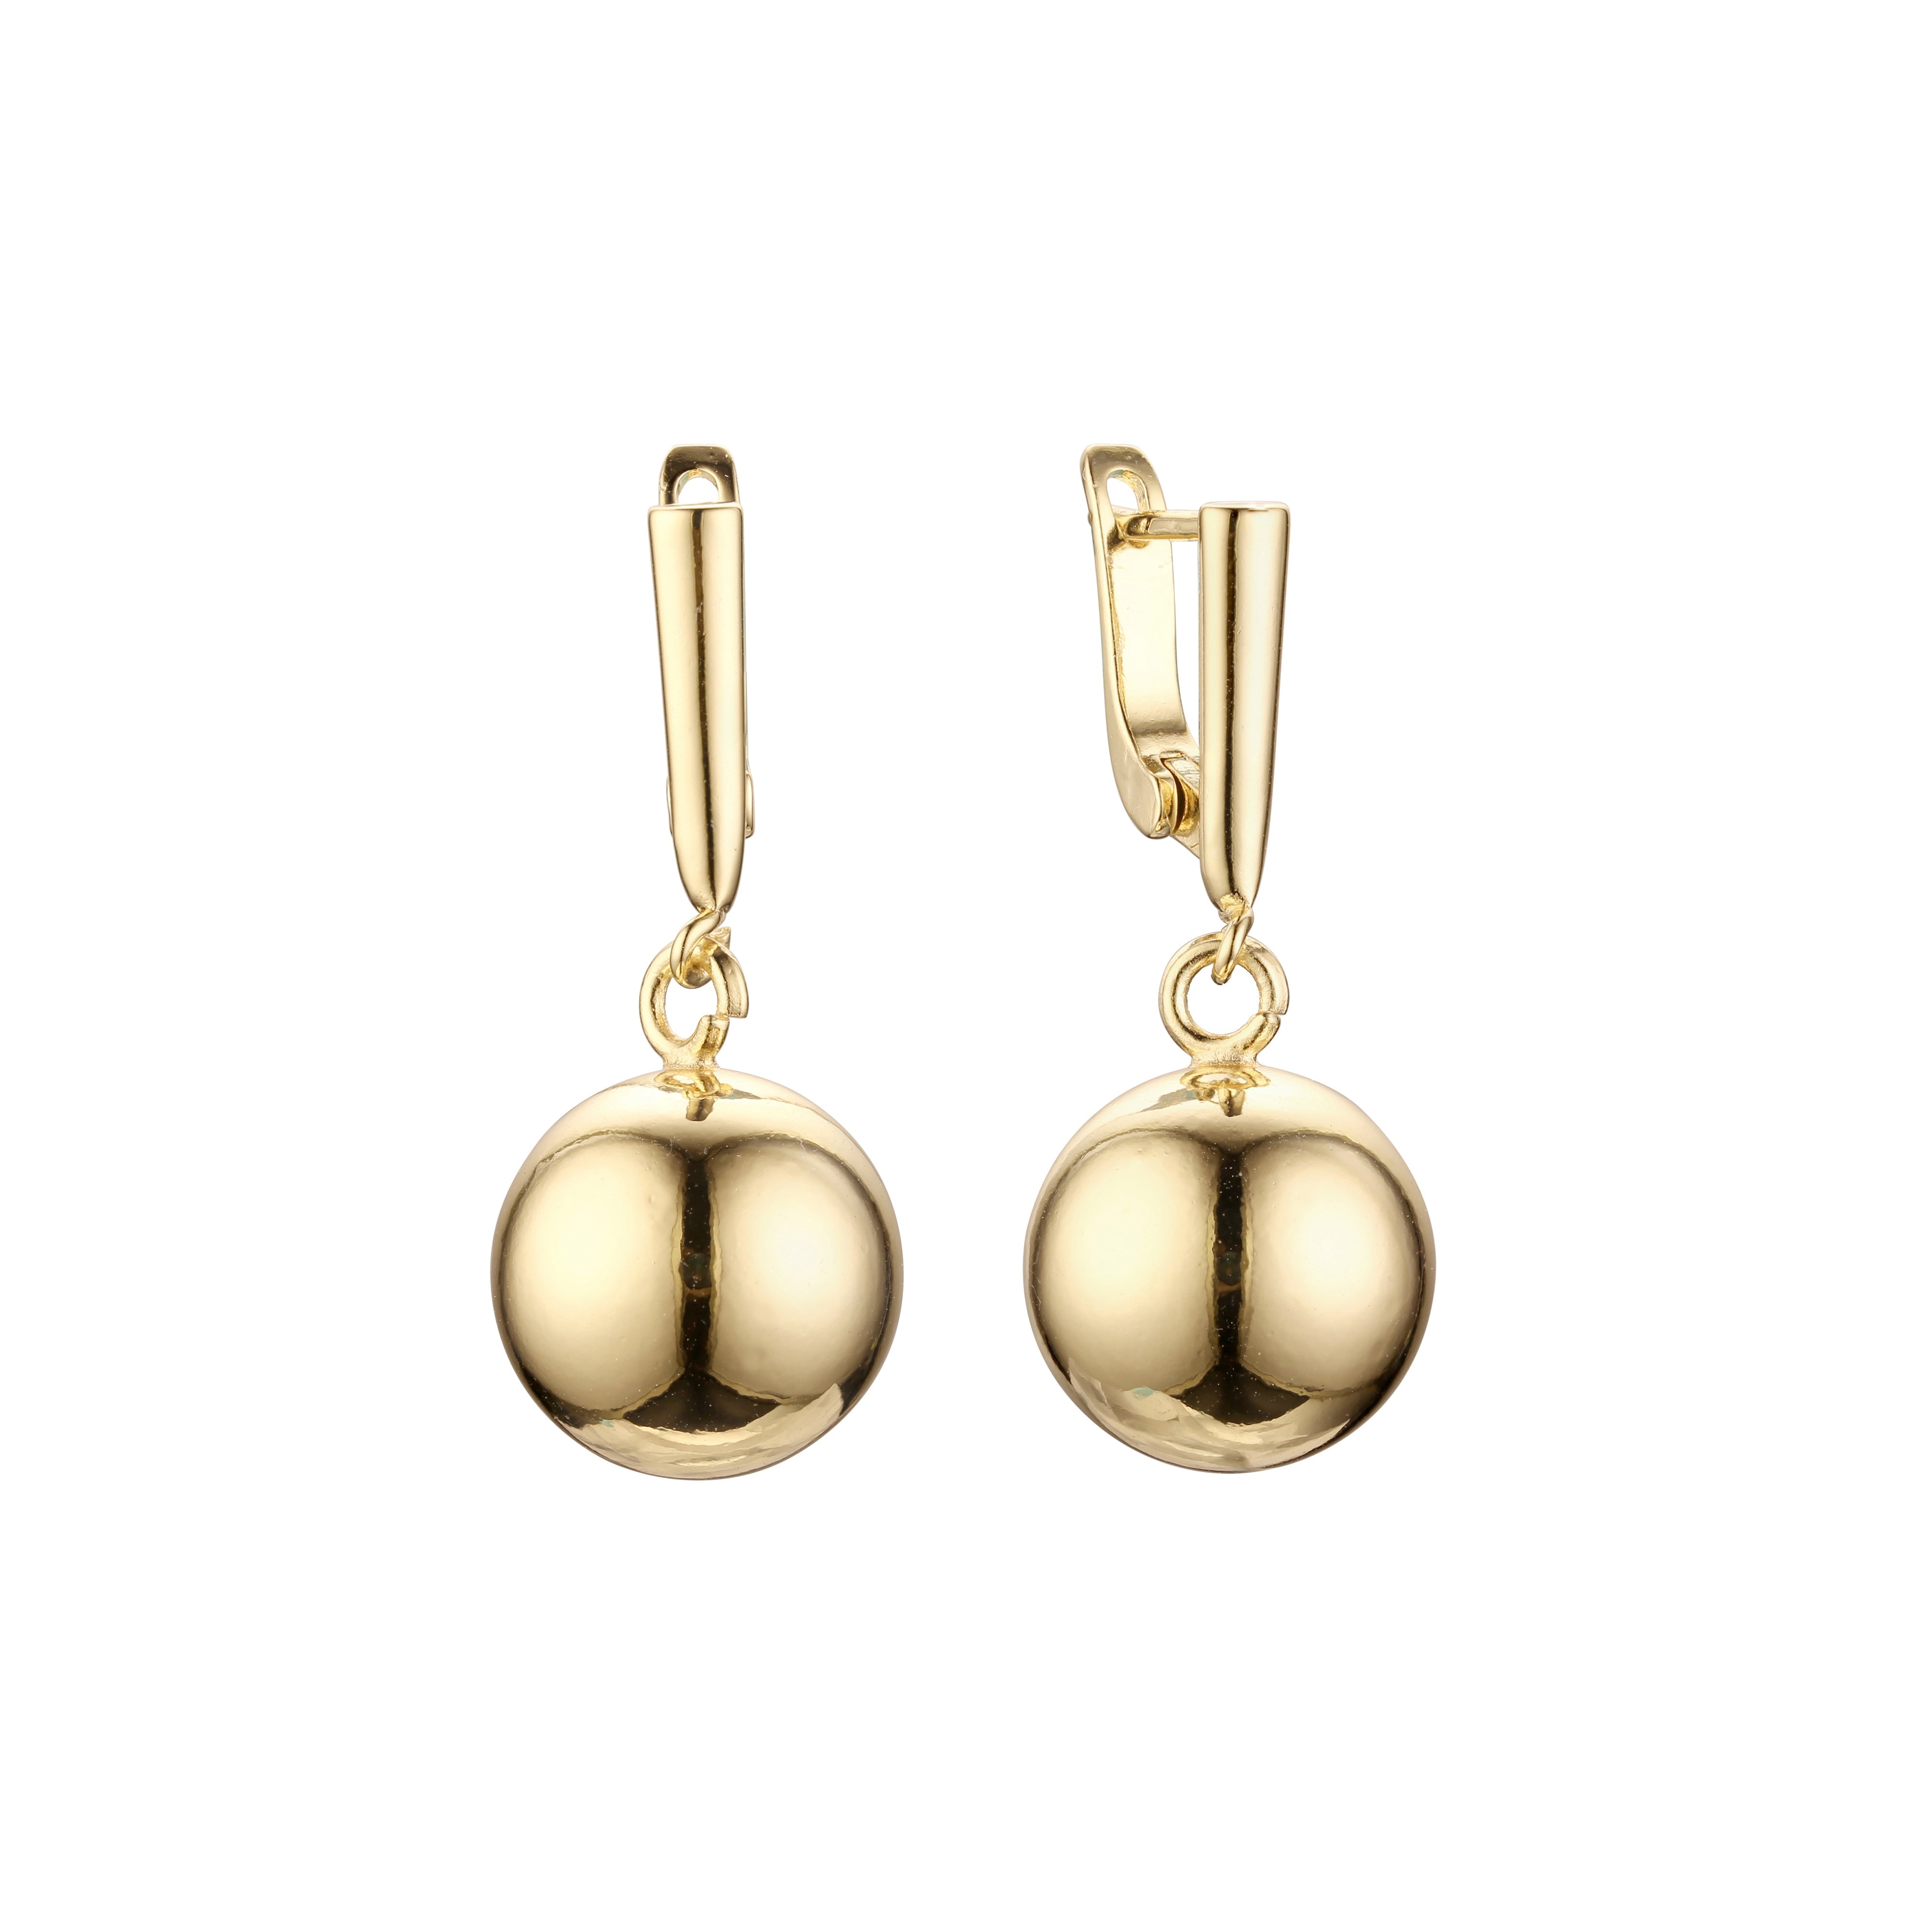 .Olga's Beads - Beads Earrings in 14K Gold, White Gold, Rose Gold plating colors